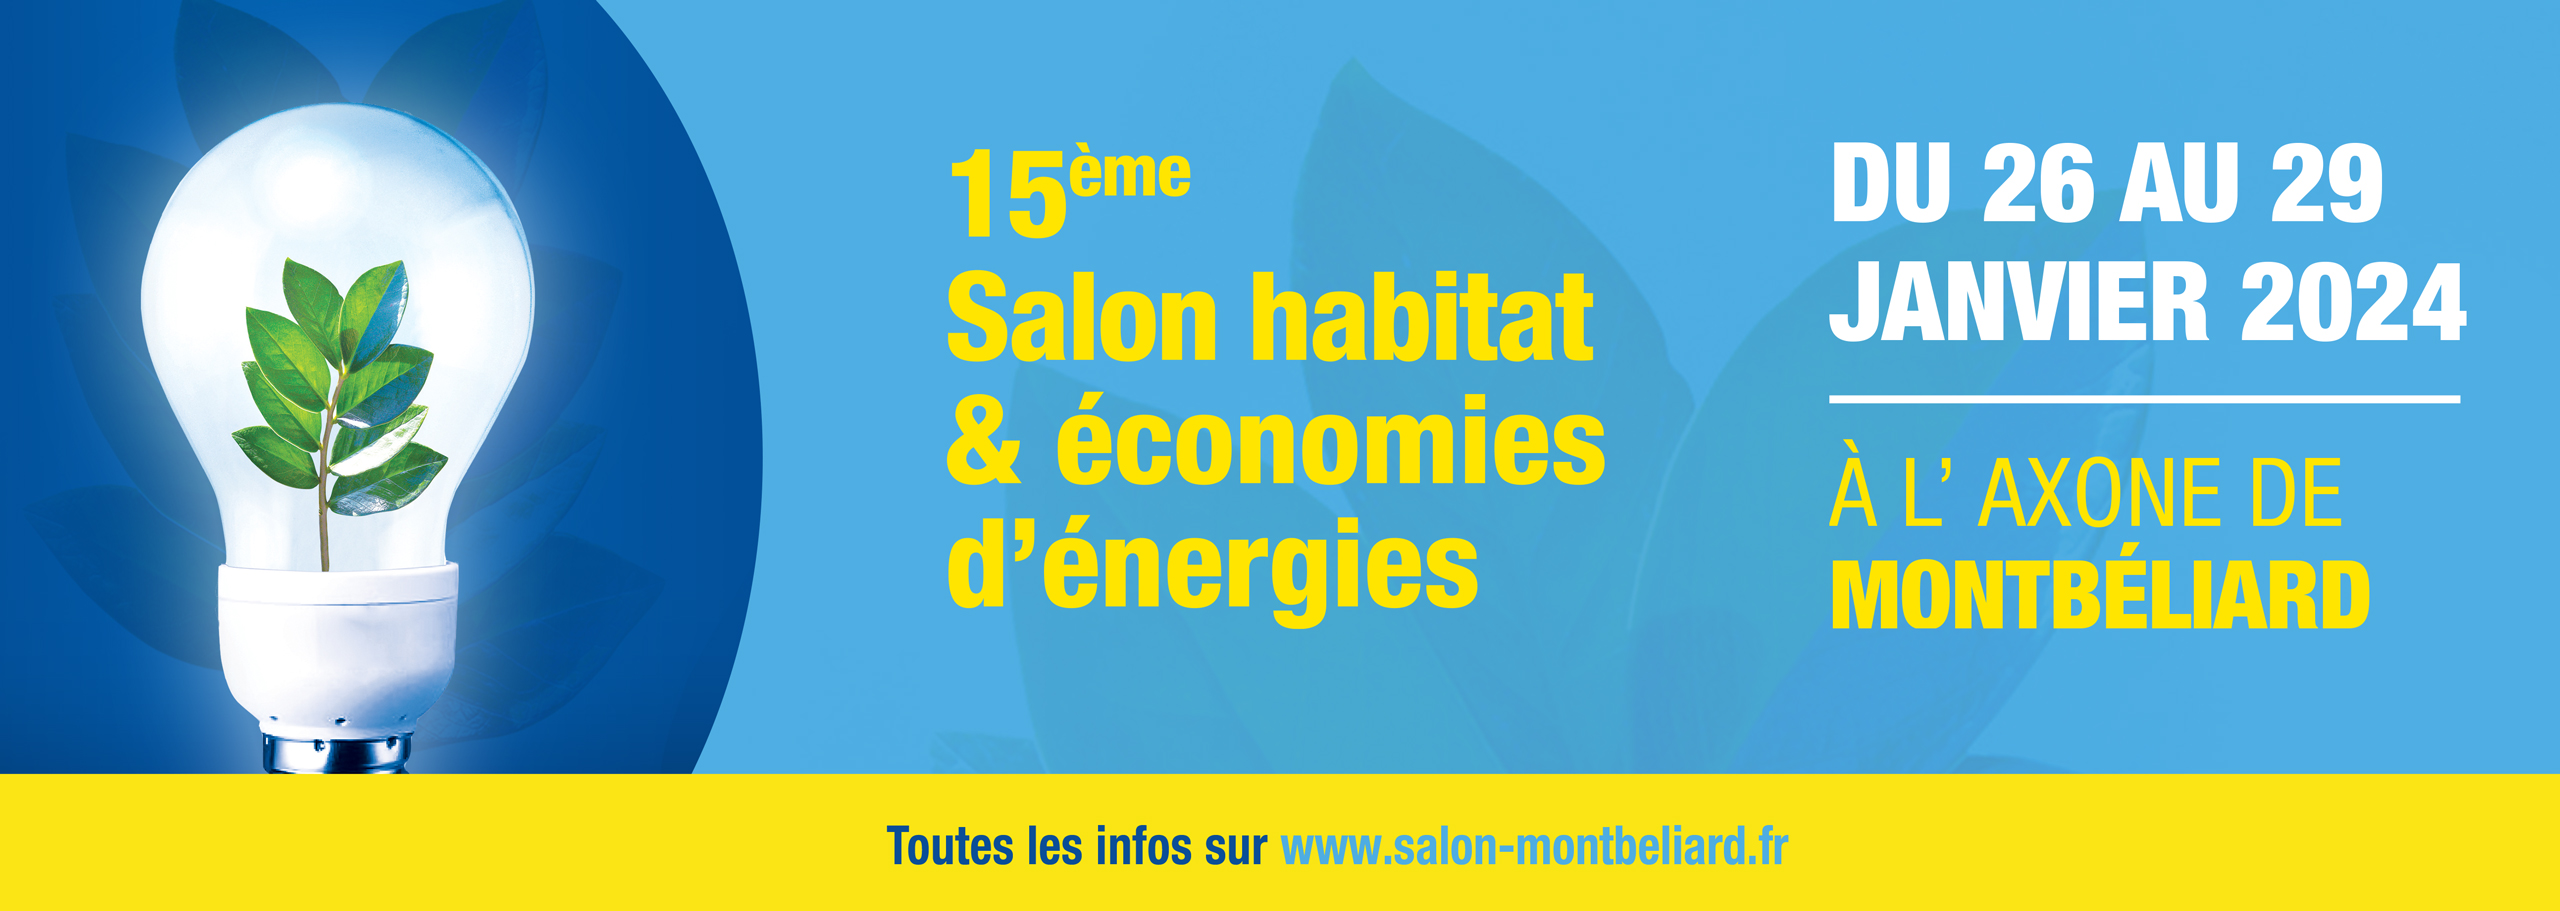 encart-salon-habitat-economies-energies-2024_V2